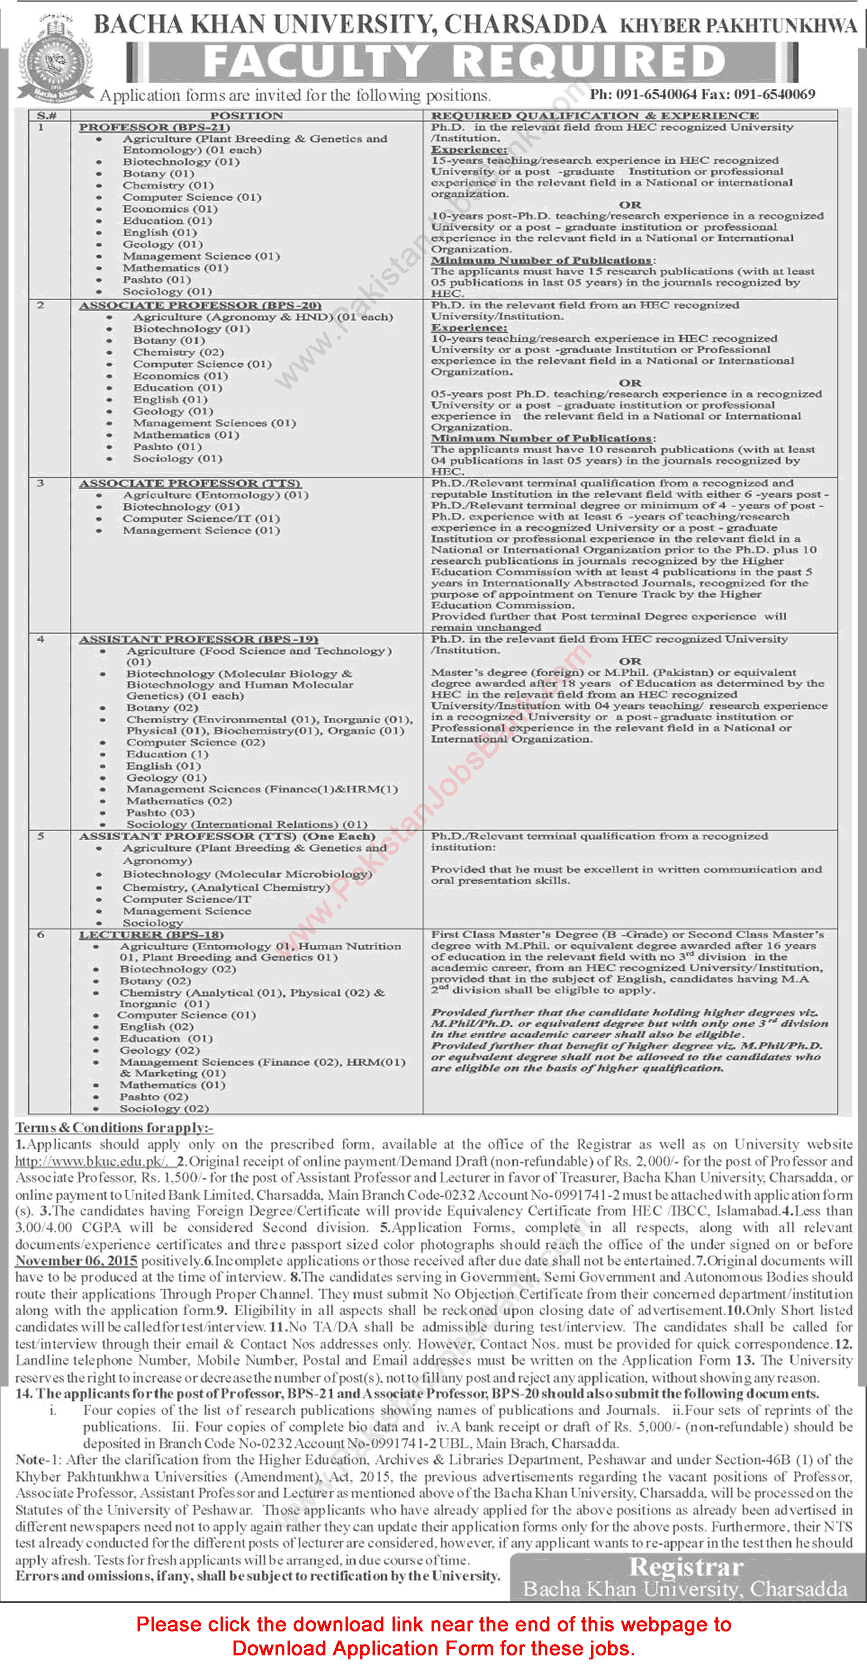 Bacha Khan University Charsadda Jobs 2015 October KPK Application Form Teaching Faculty Latest